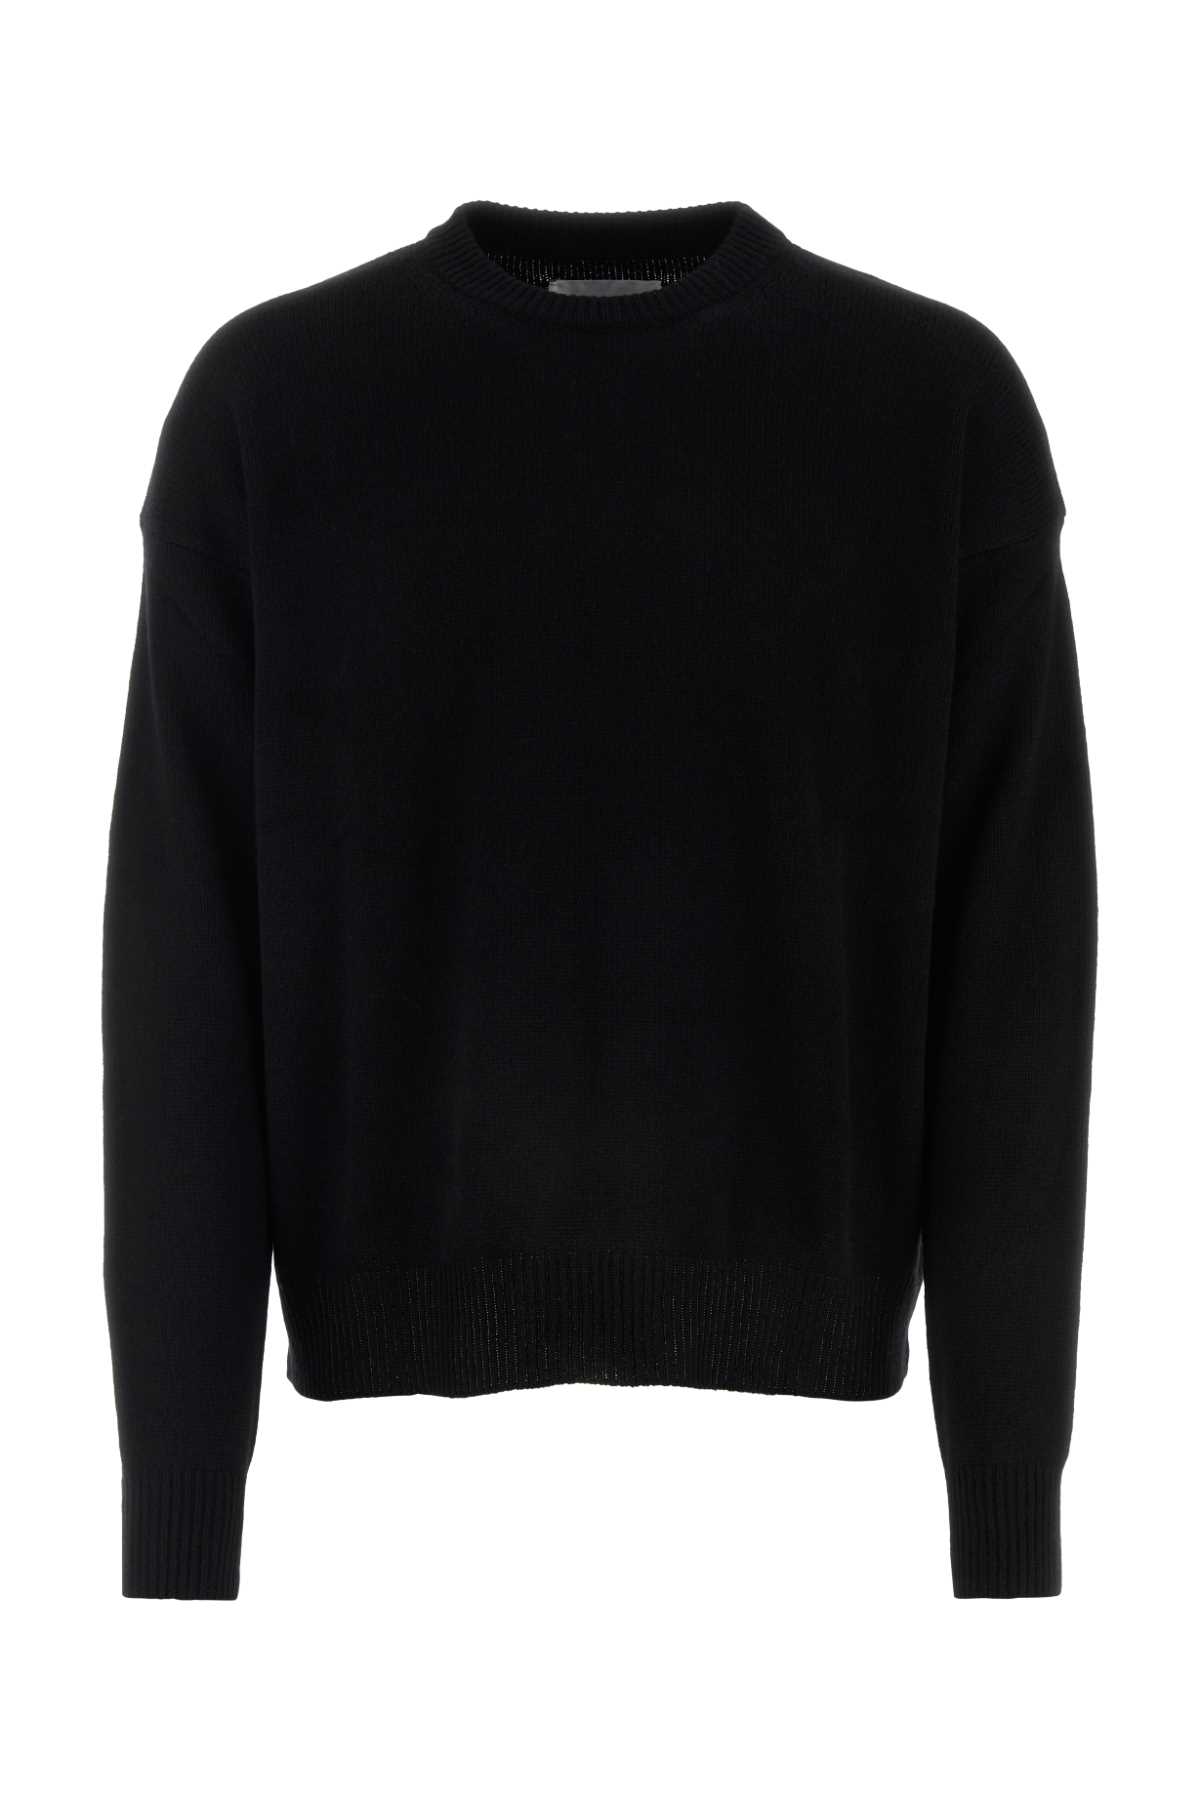 Jil Sander Black Cashmere Sweater